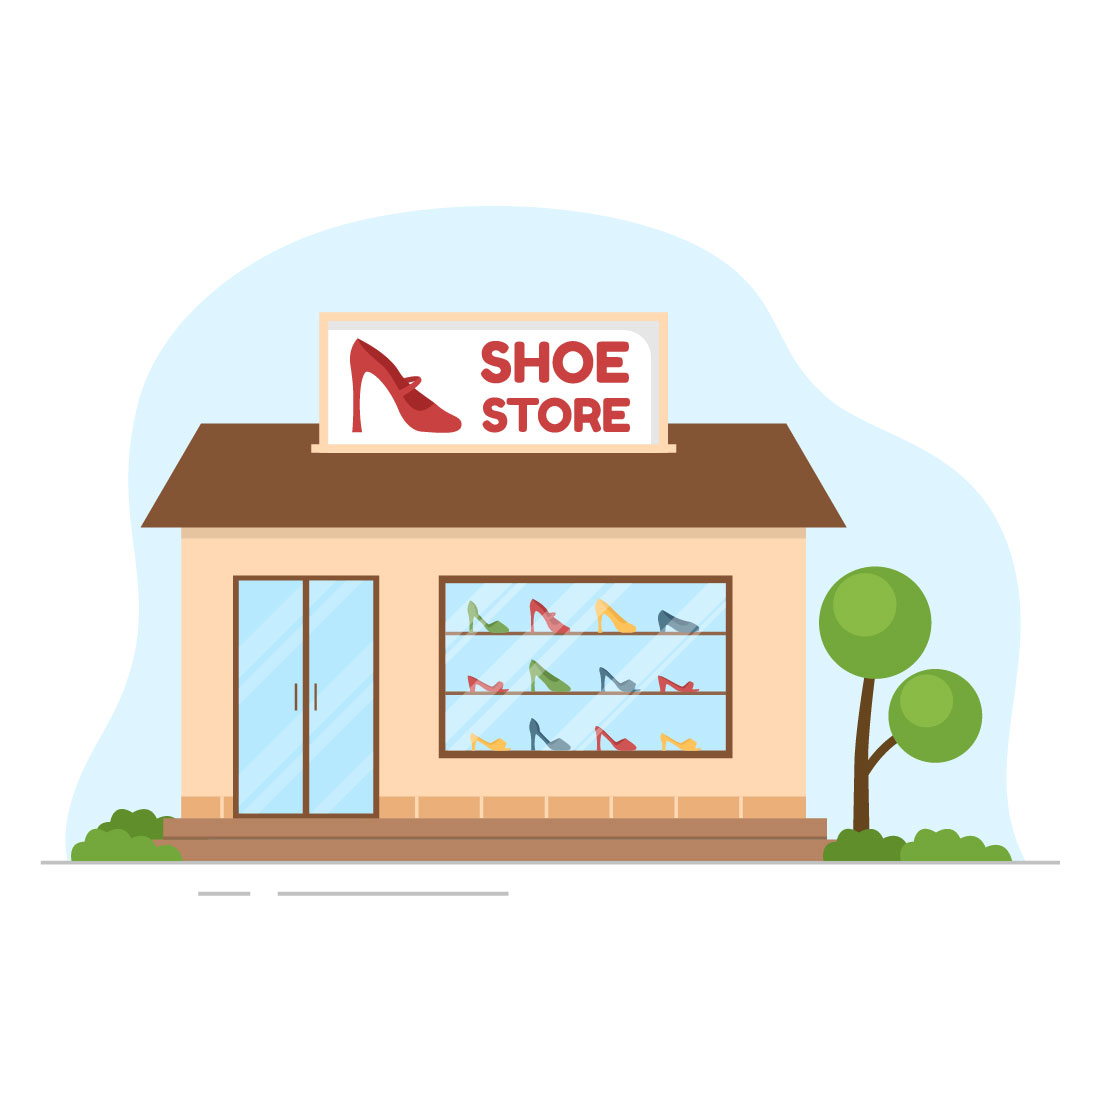 Shoe Store Flat Design Illustration cover image.